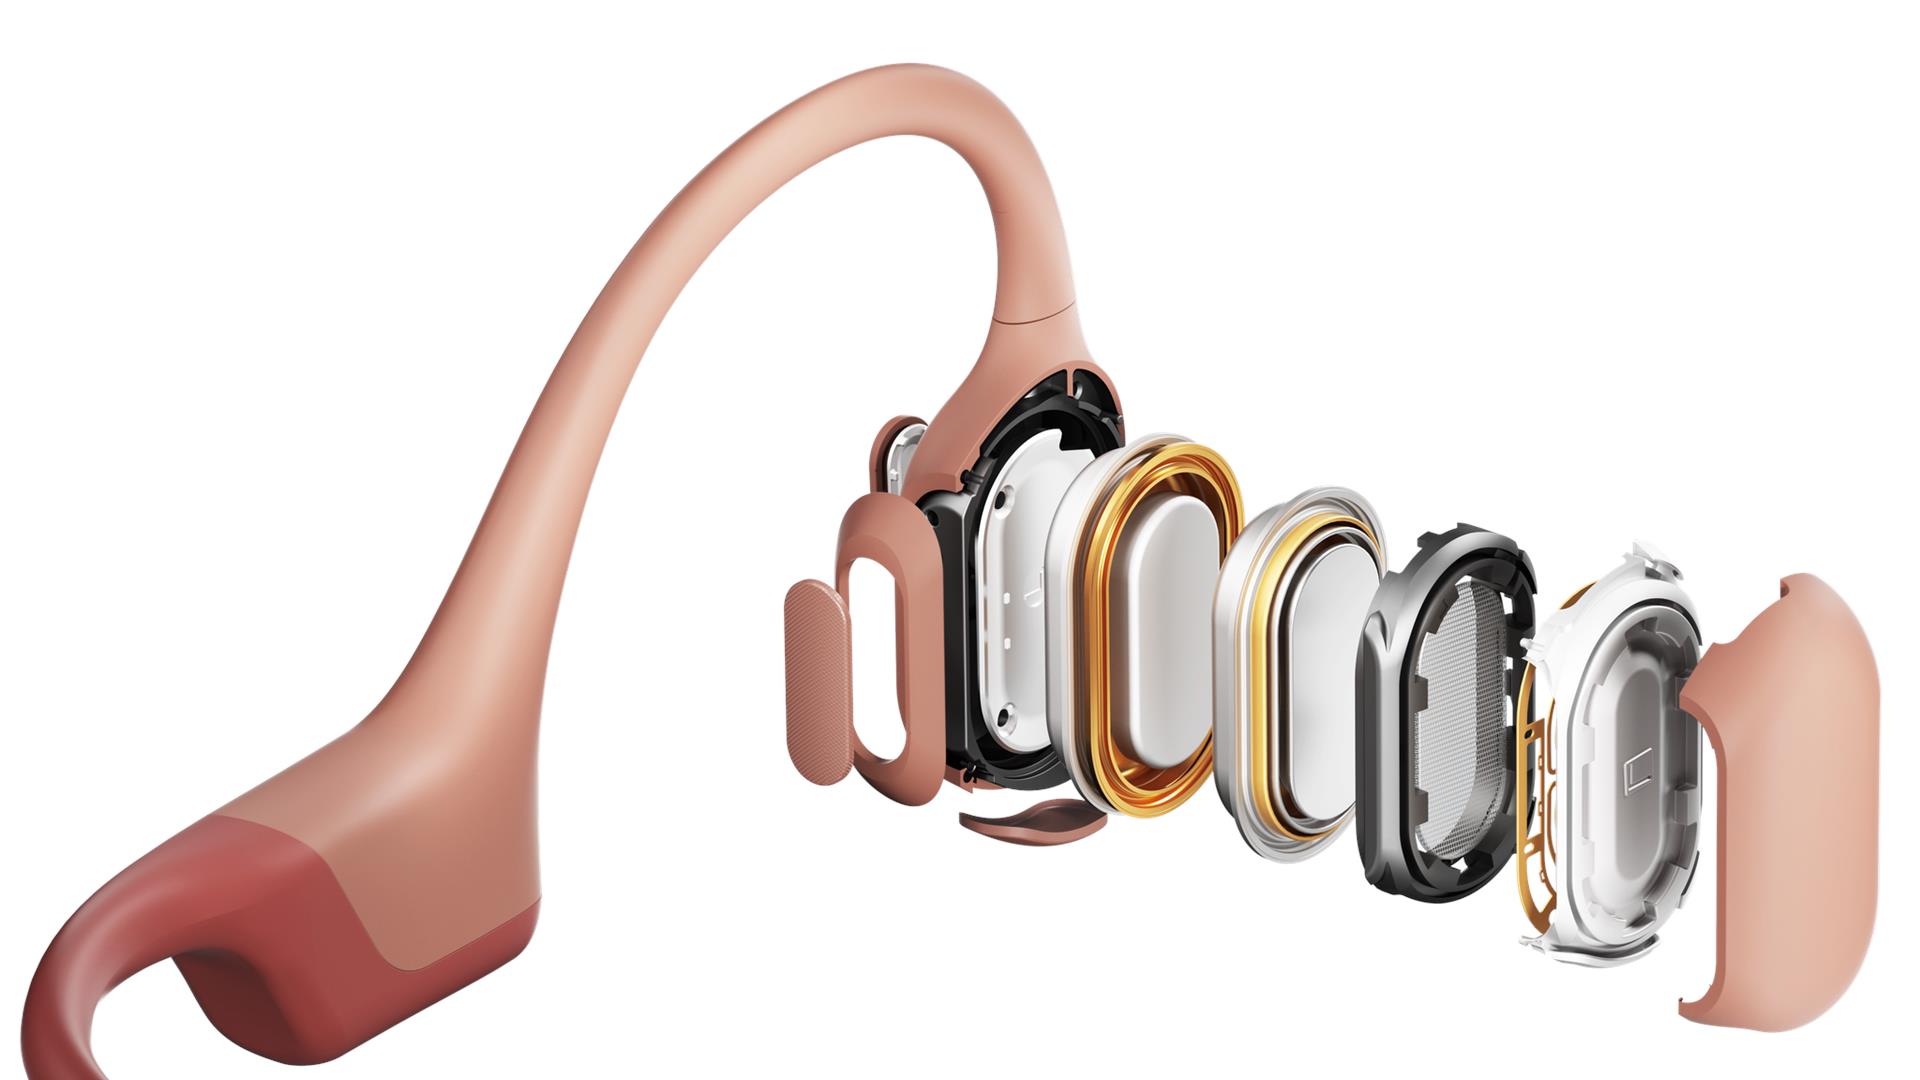 Shokz OpenRun Pro Premium Bone Conduction Headphones, Pink